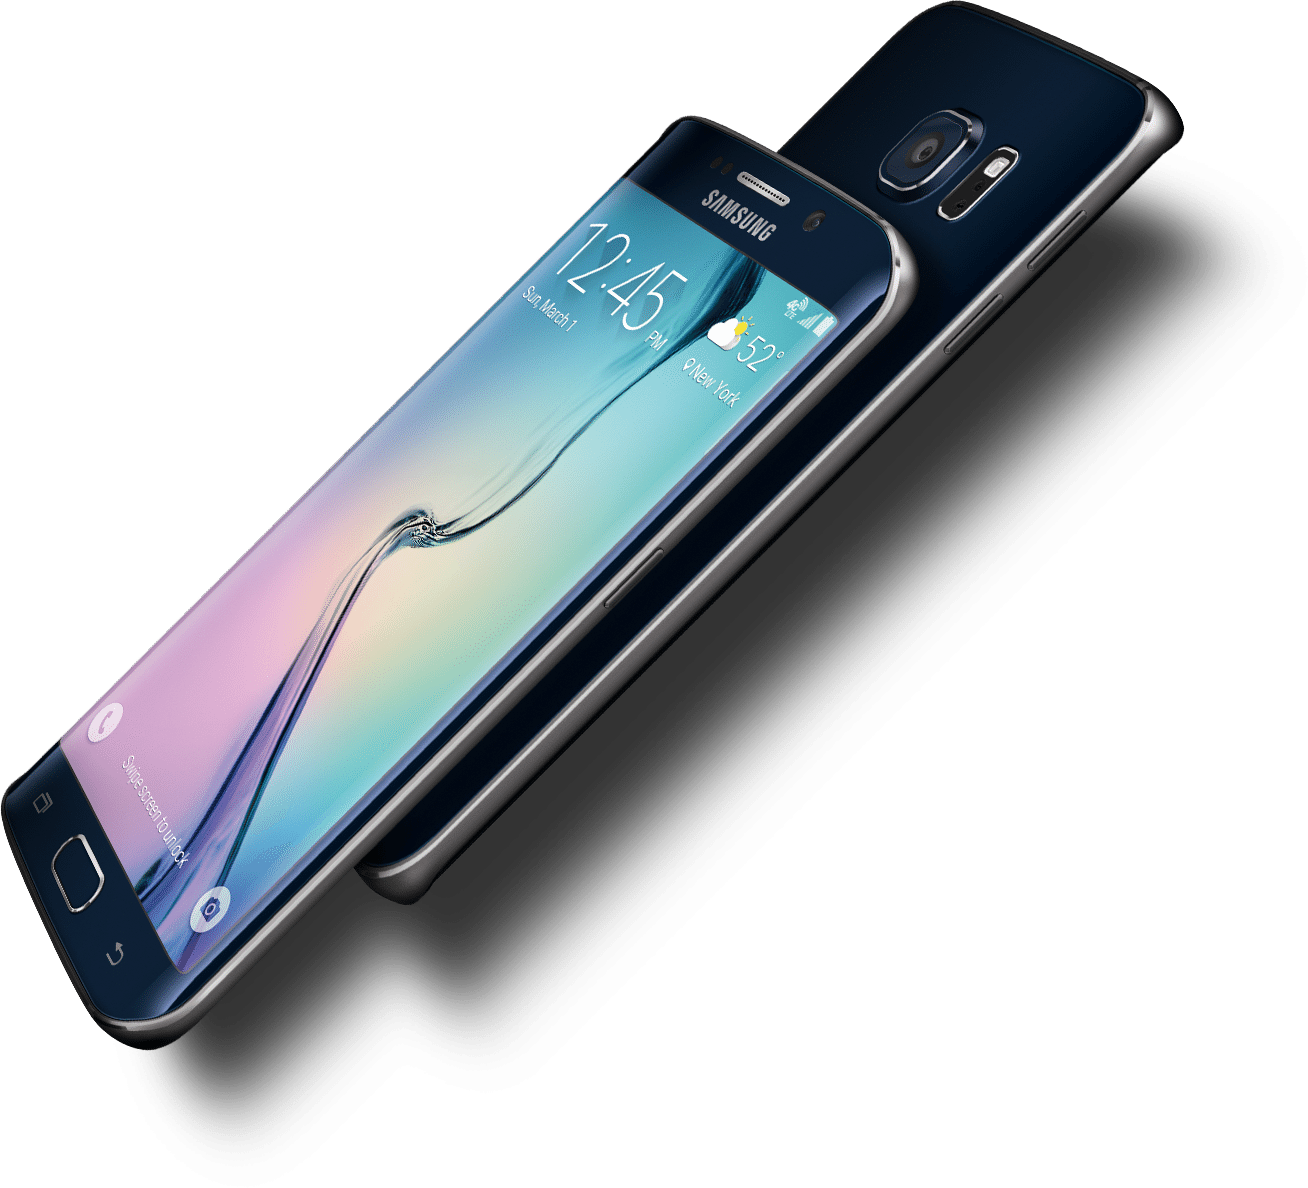 LG G4 versus Samsung Galaxy S6 8